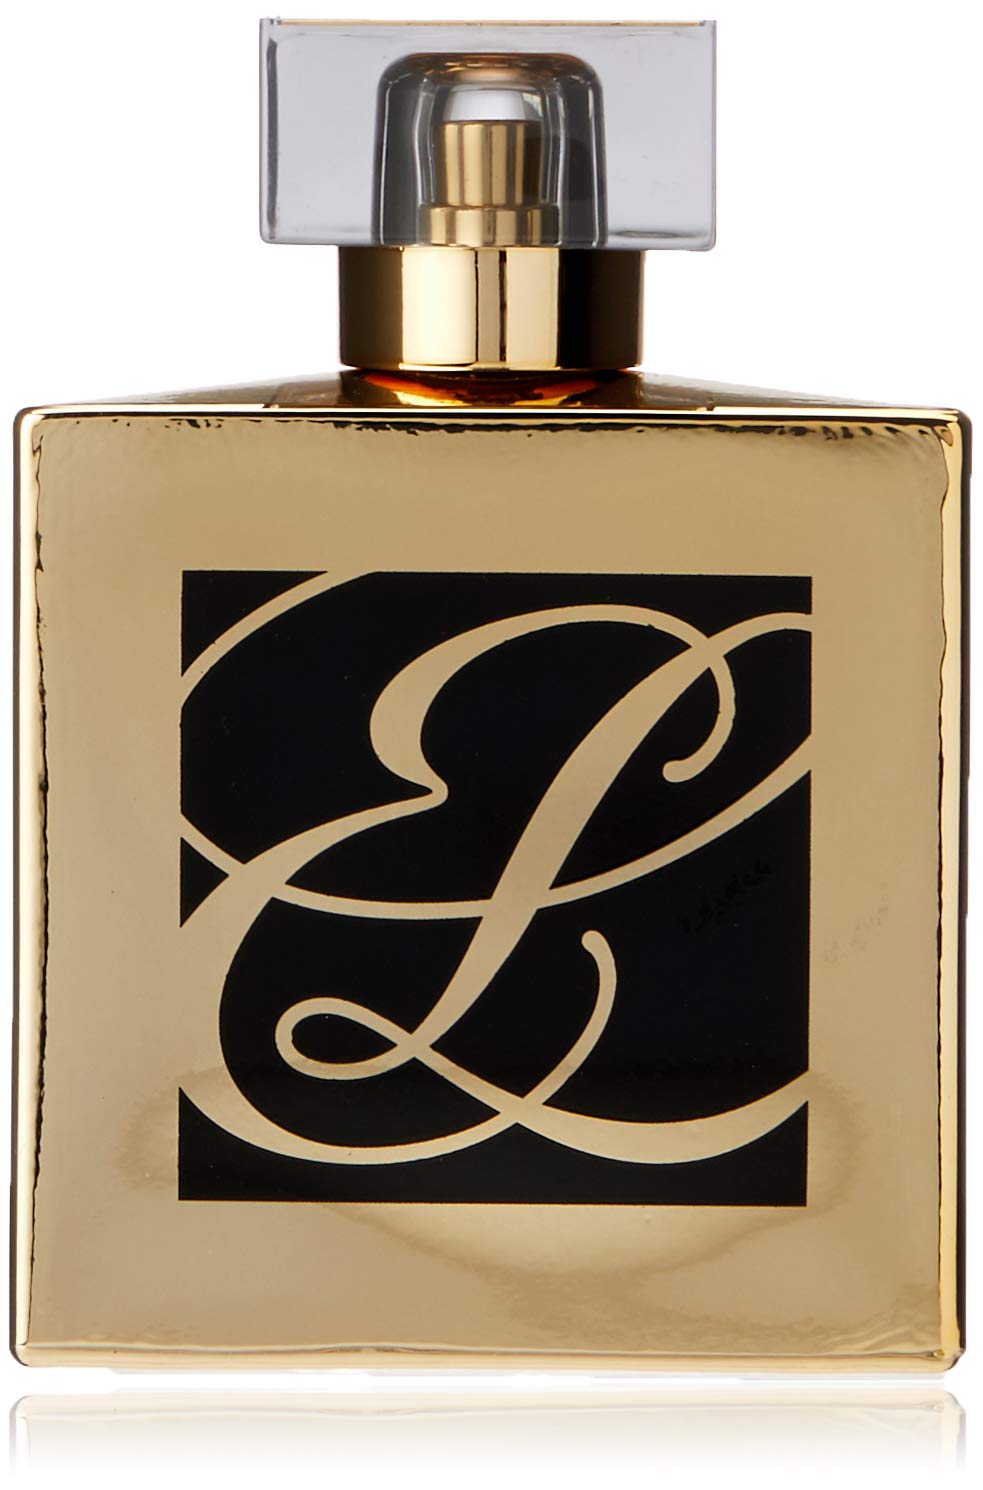 Estee Lauder Wood Mystique for Women Eau De Perfume Spray, 3.4 Ounce